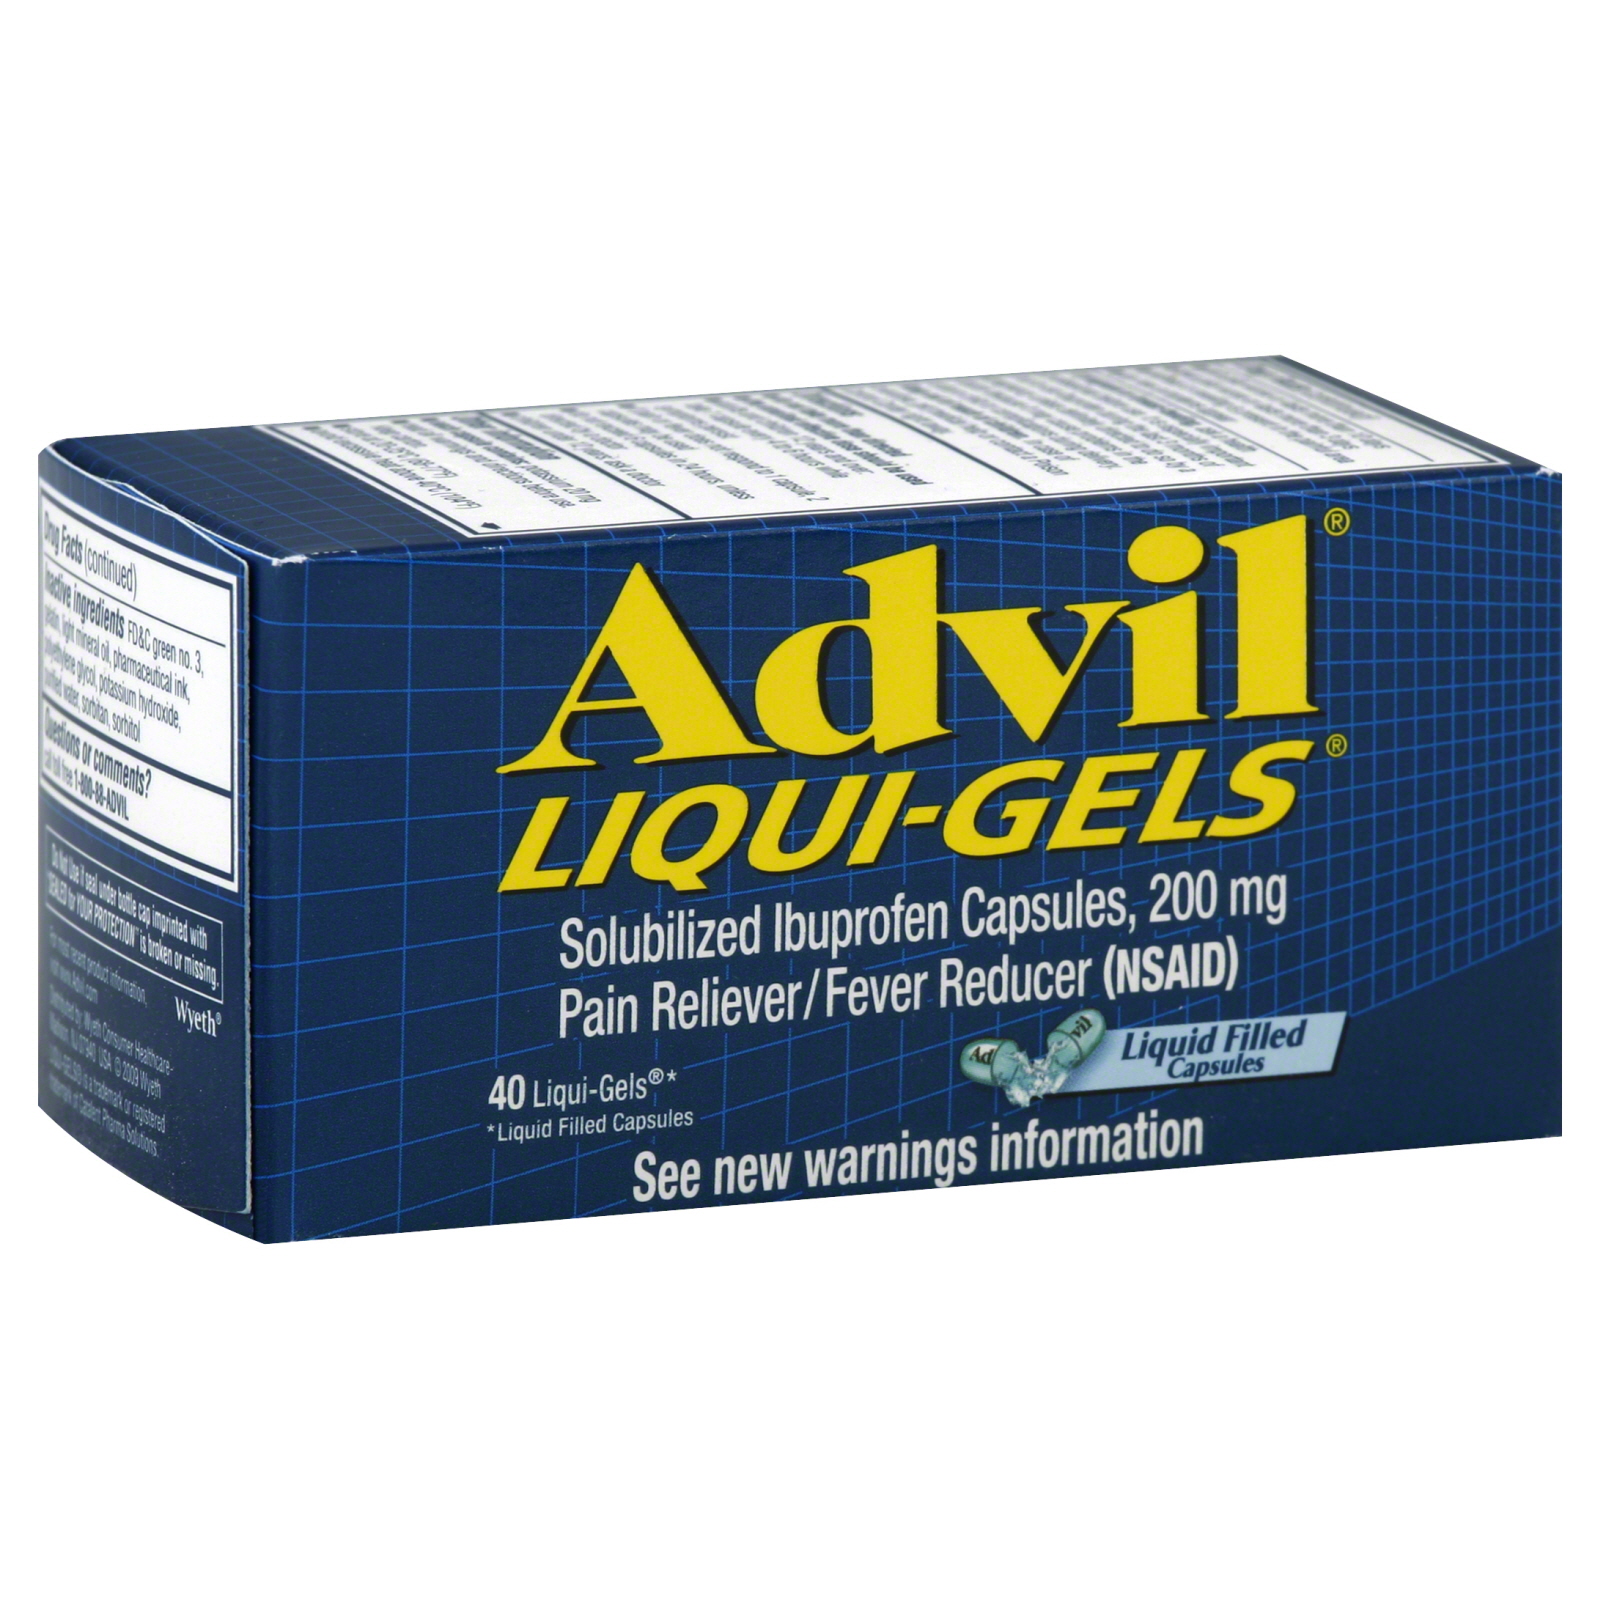 Advil 200 MG. Адвил 400. Advil Liqui-Gels. Advil Liqui-Gels баночка. Liqui gels